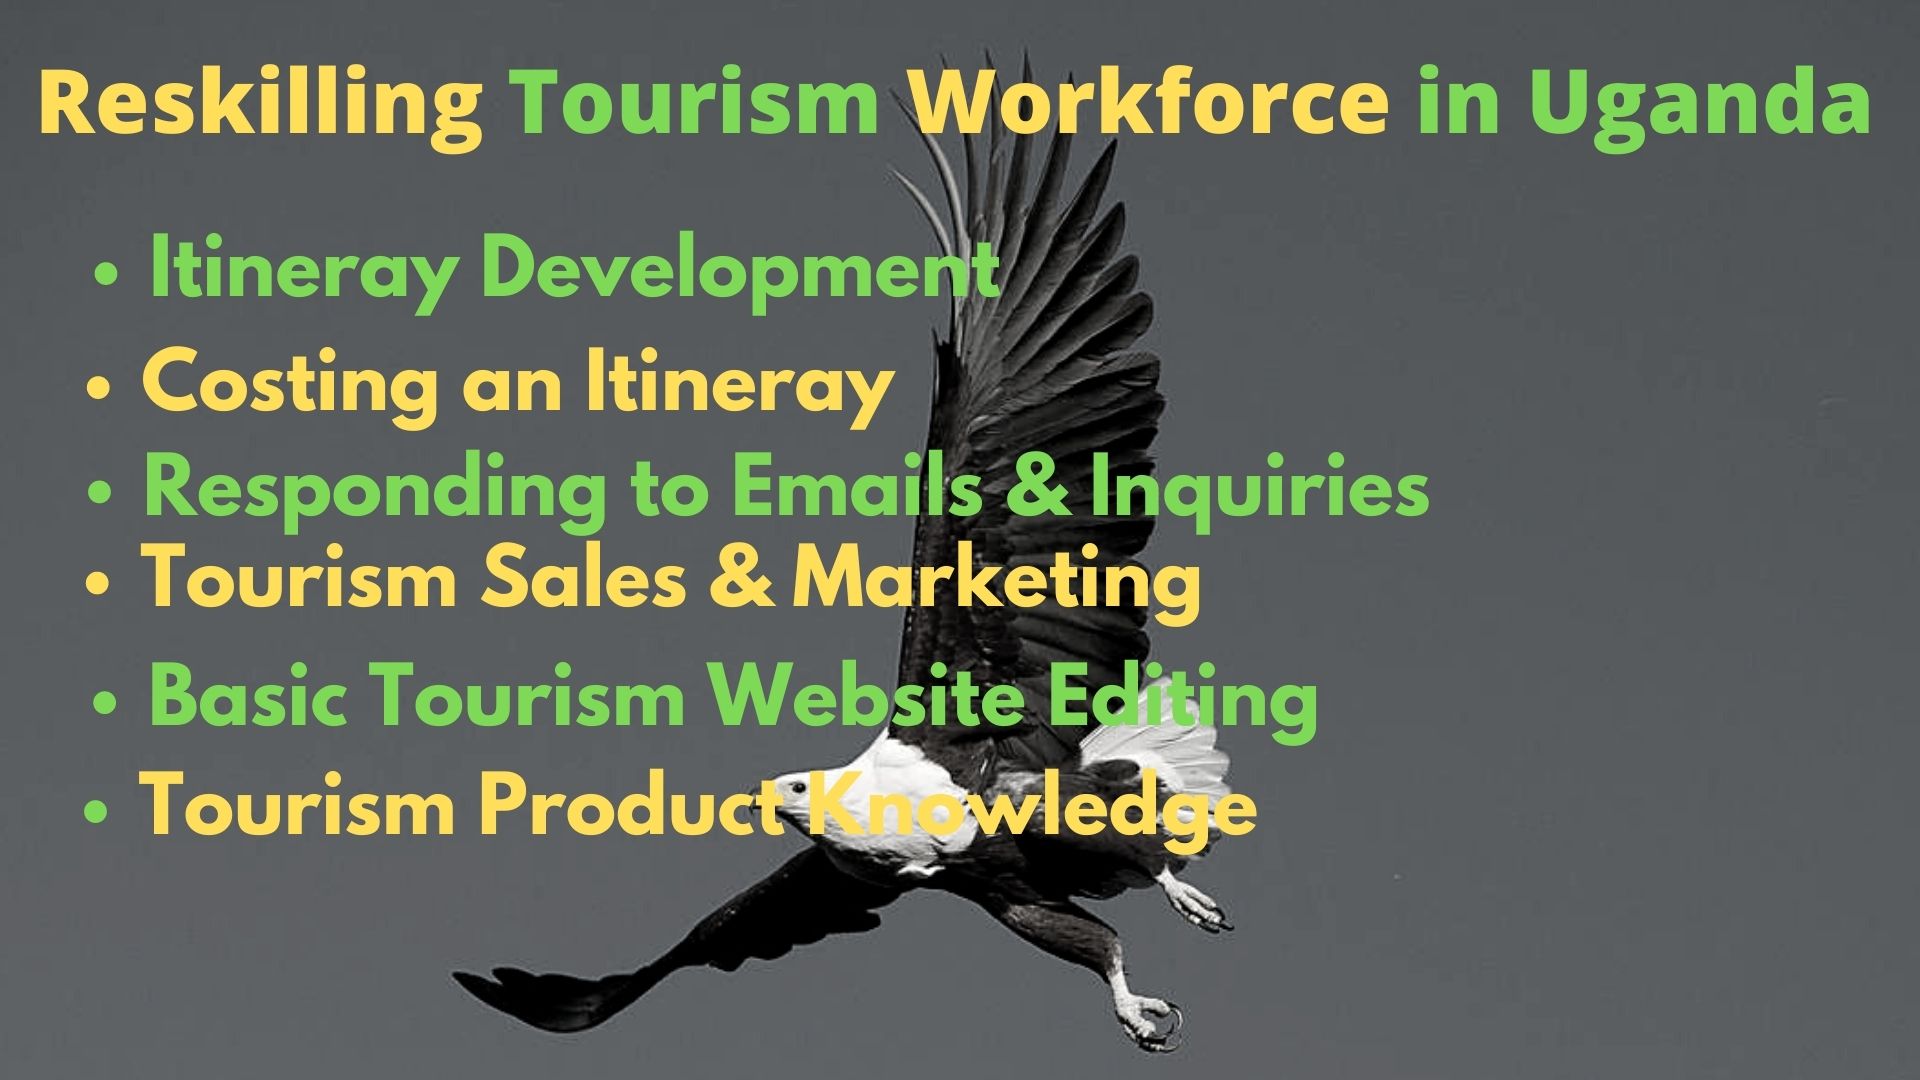 Reskilling Tourism Workforce